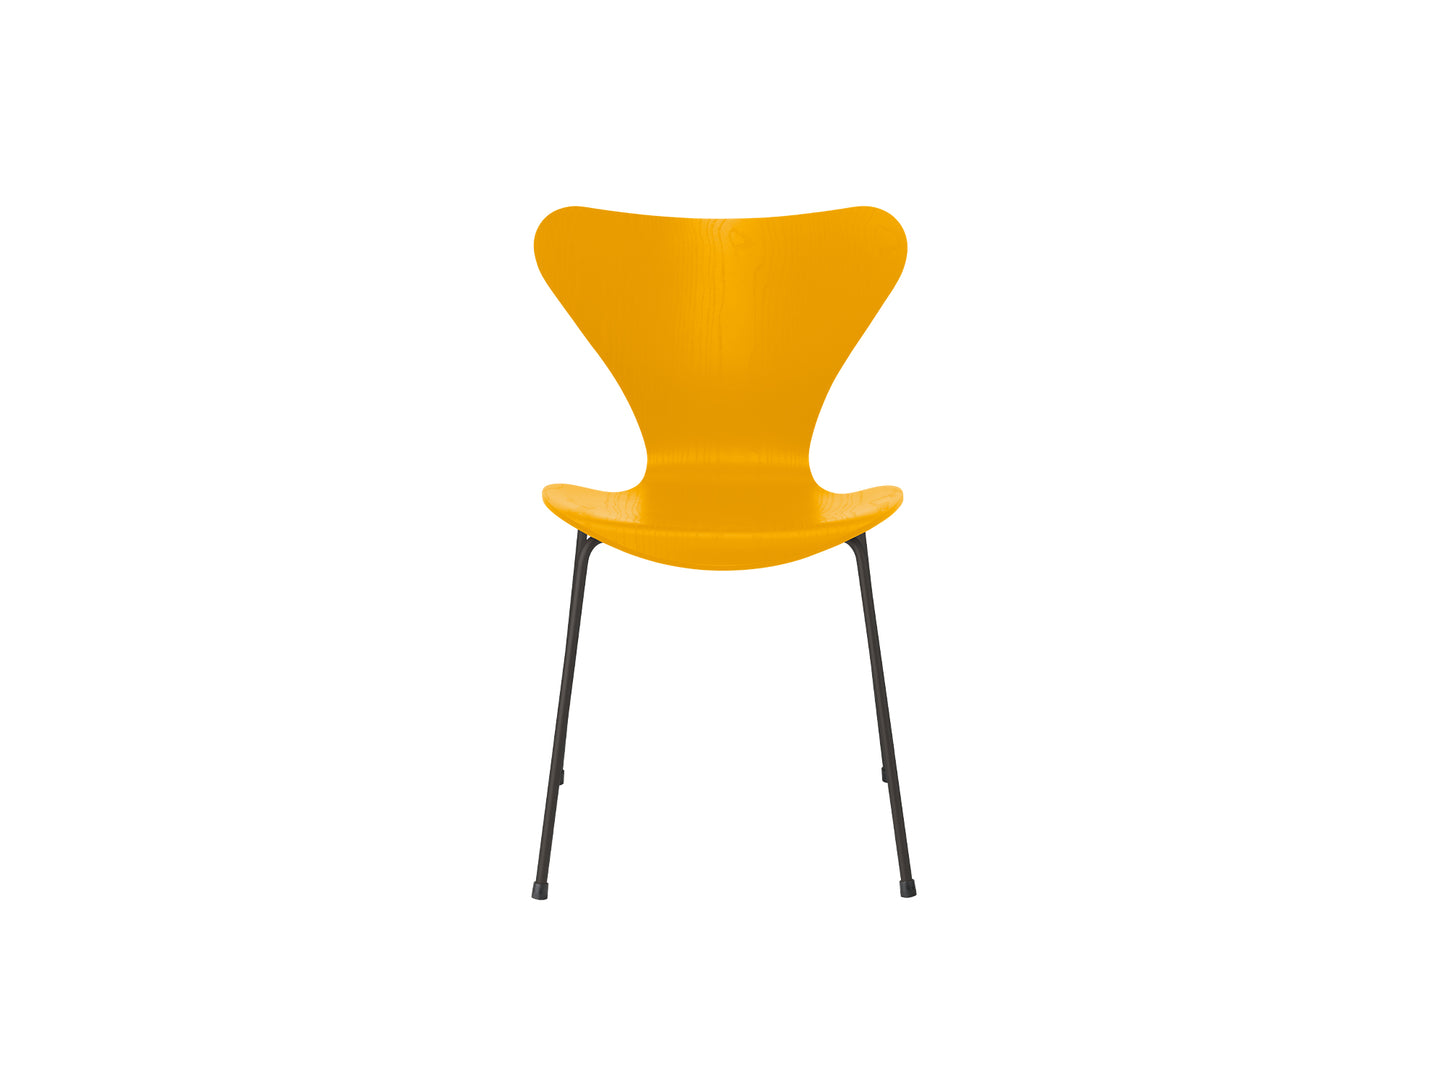 Series 7™ 3107 Dining Chair by Fritz Hansen - True Yellow Coloured Ash Veneer Shell / Warm Graphite Steel